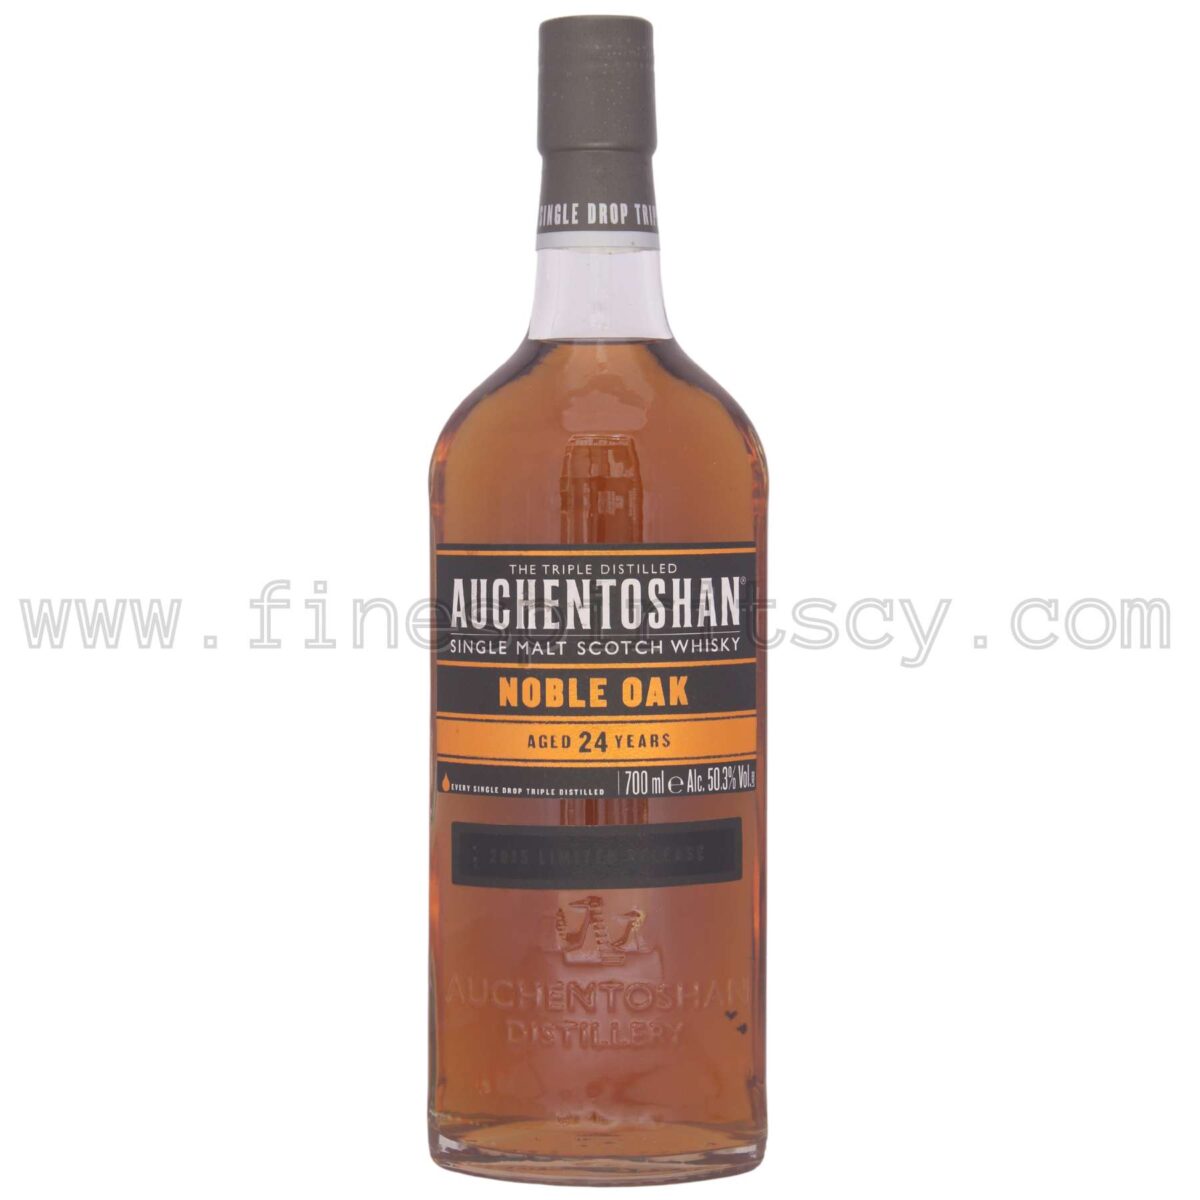 Auchentoshan 24 Year Old Noble Oak Lowlands Scotch Whisky Bottle Front Cyprus